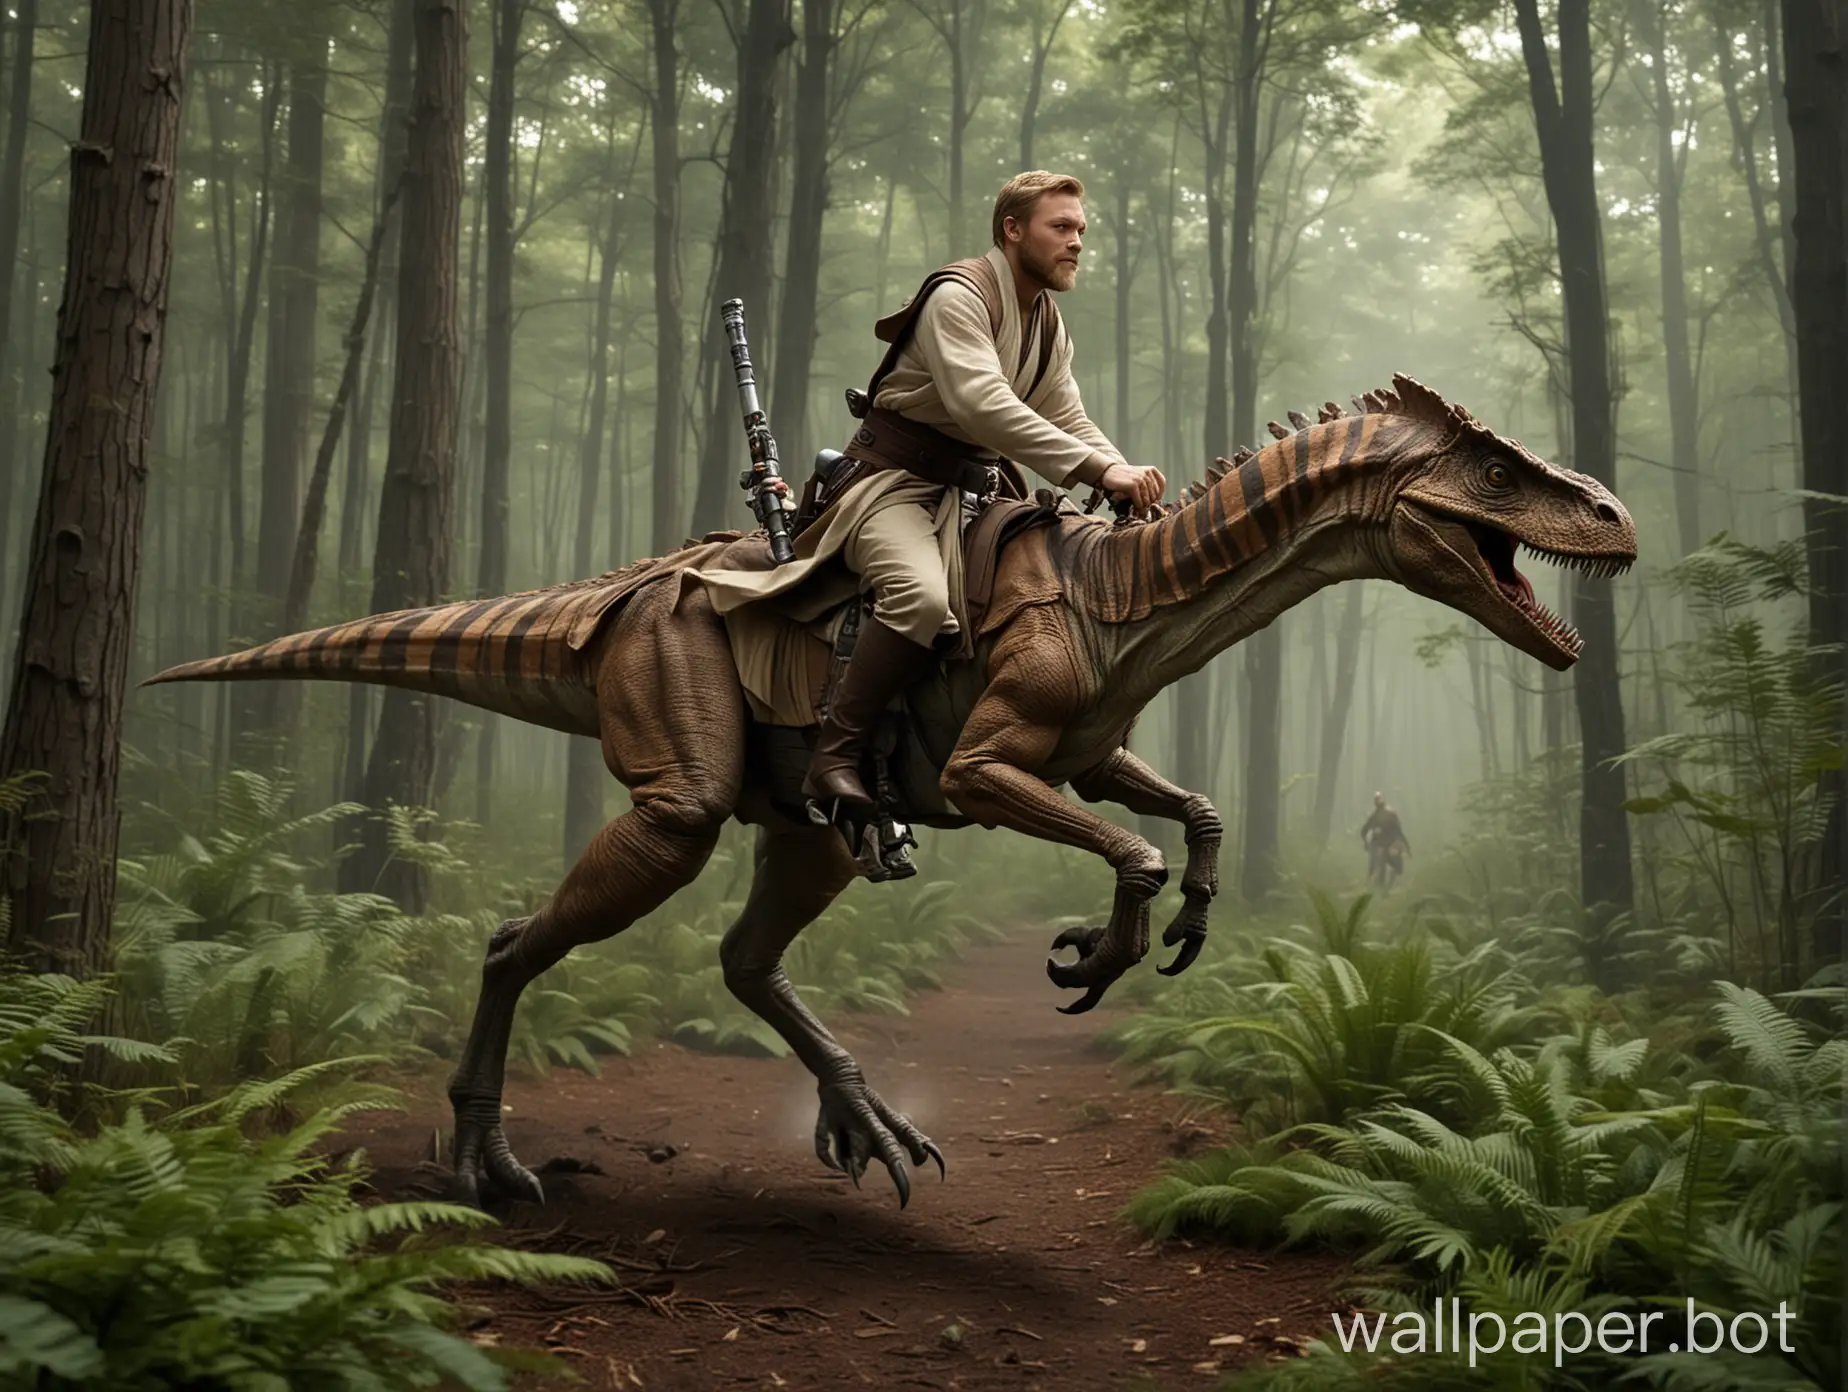 Jedi-ObiWan-Kenobi-Riding-Velociraptor-Through-Forest-with-Lightsaber